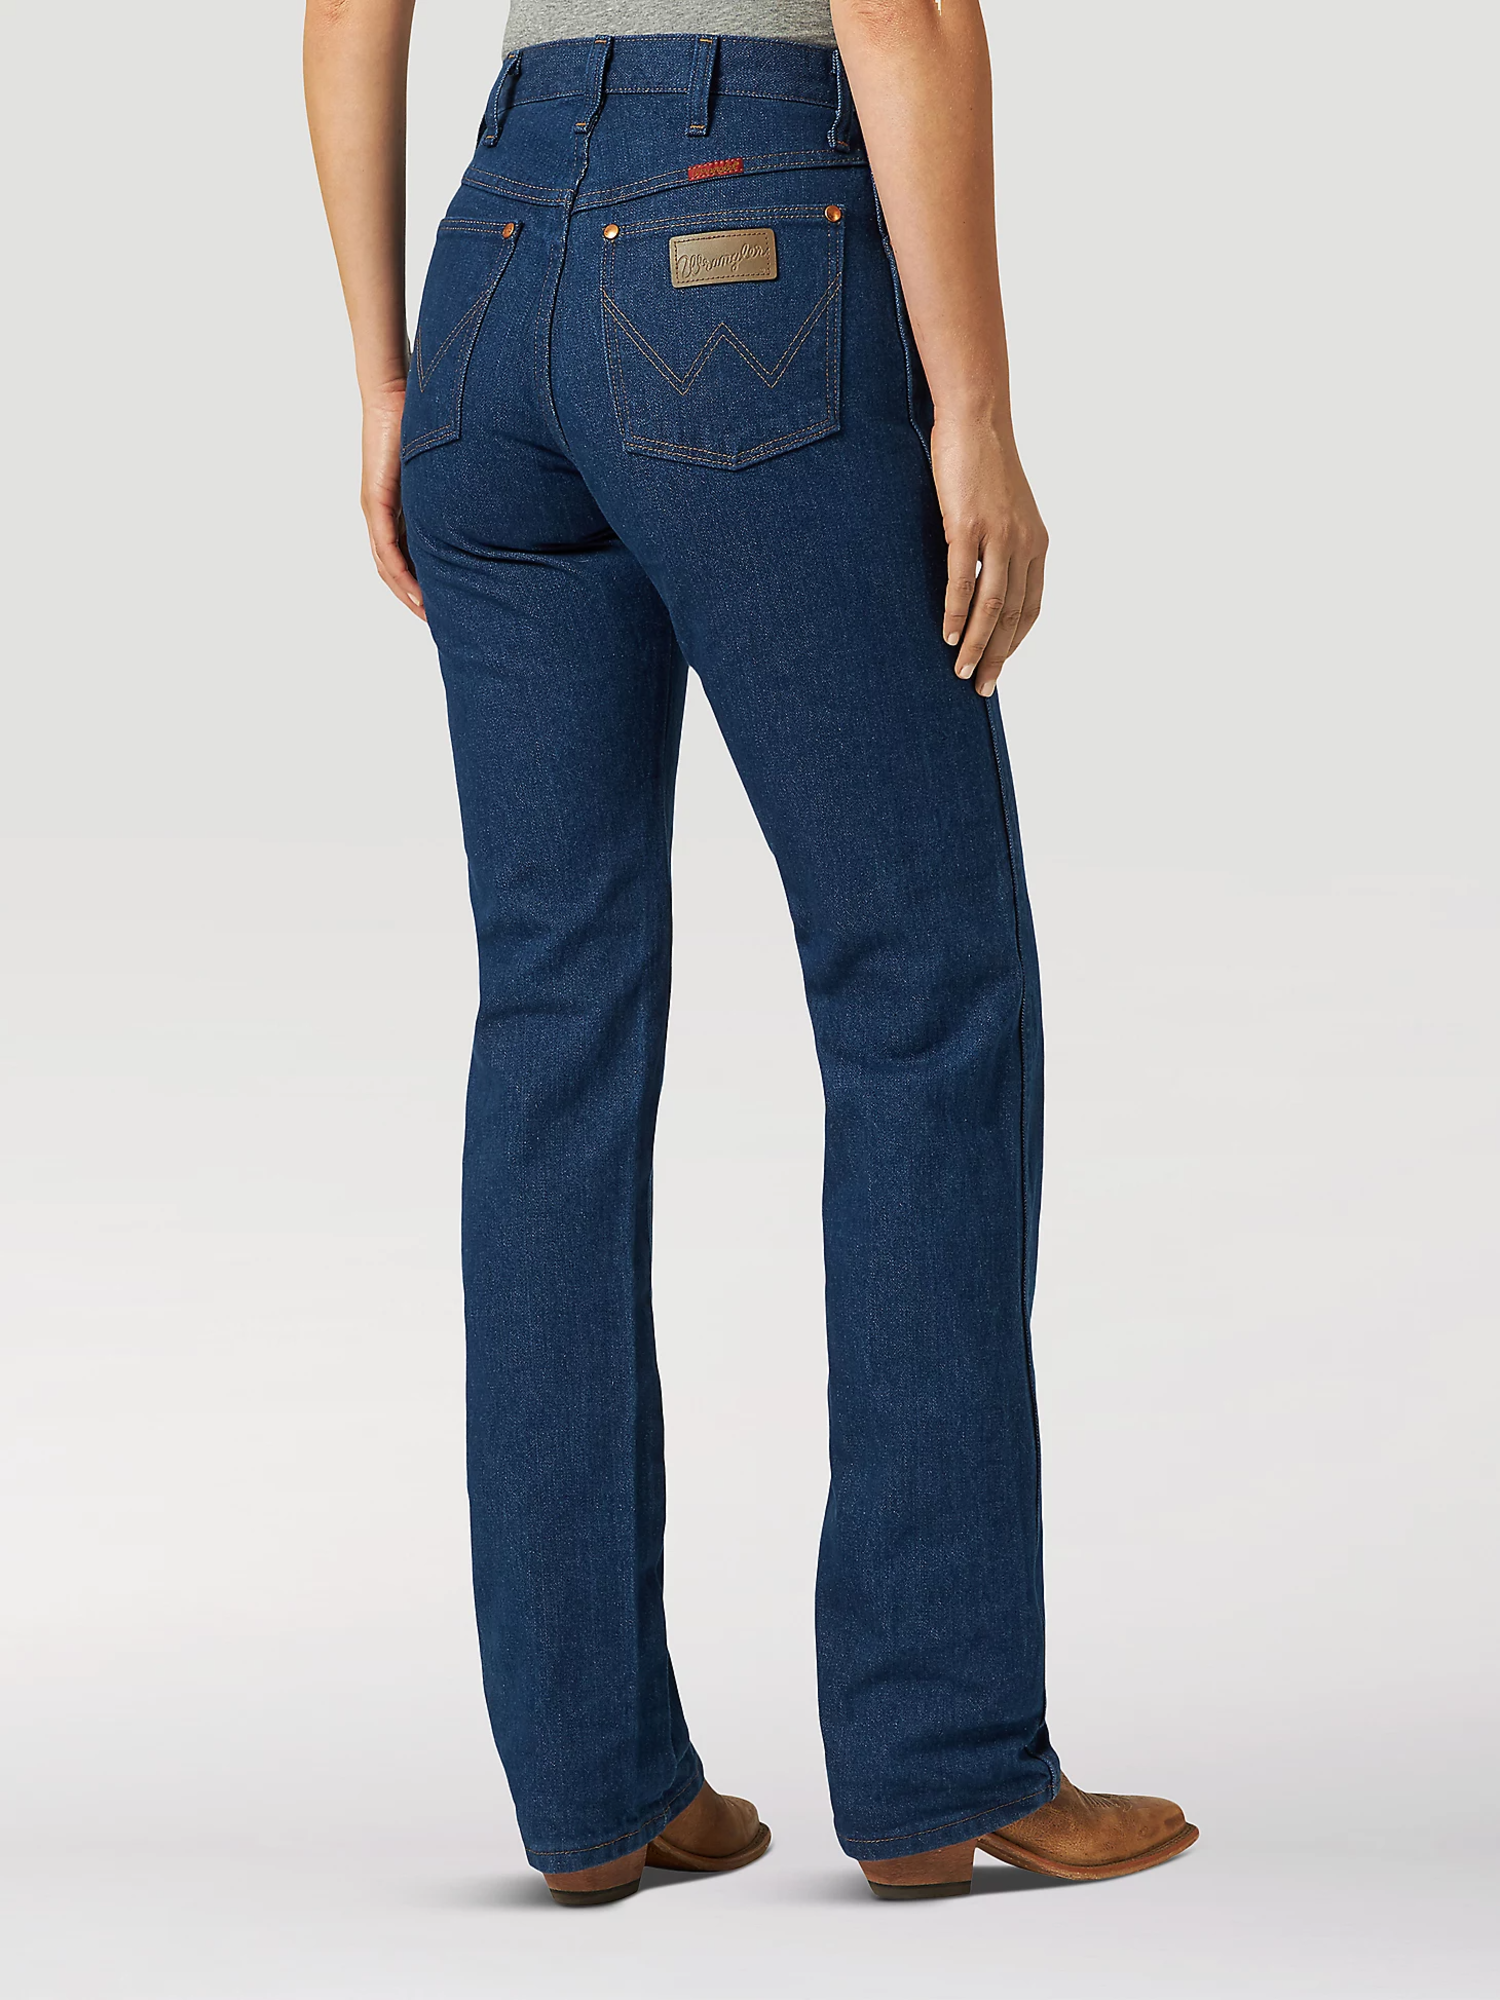 https://cdn.shoplightspeed.com/shops/633771/files/45219180/1500x4000x3/wrangler-cowboy-cut-slim-fit-14mwz-jeans.jpg